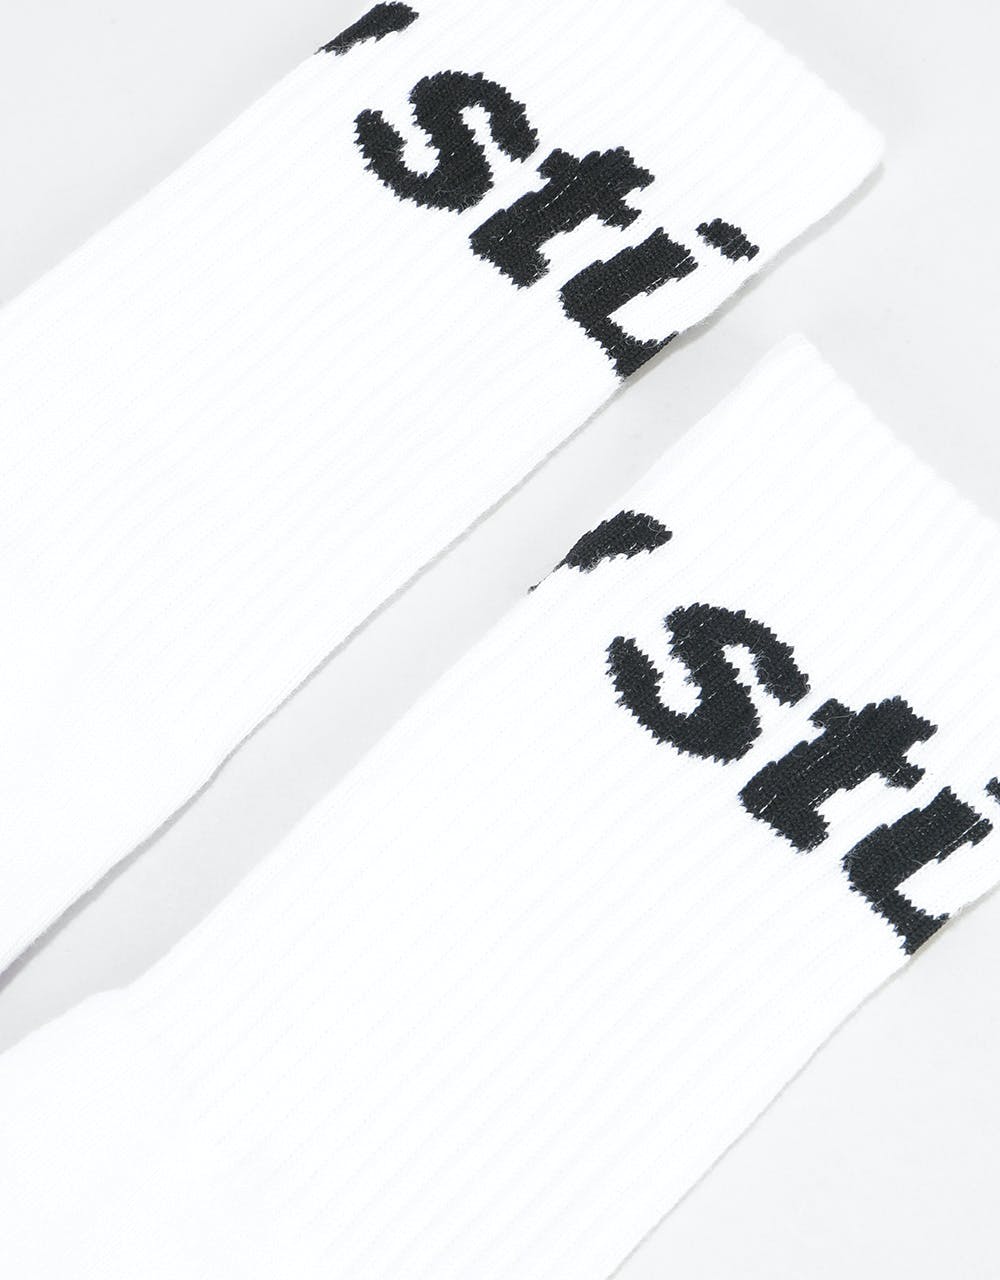 Stüssy Jacquard Logo Socks - White